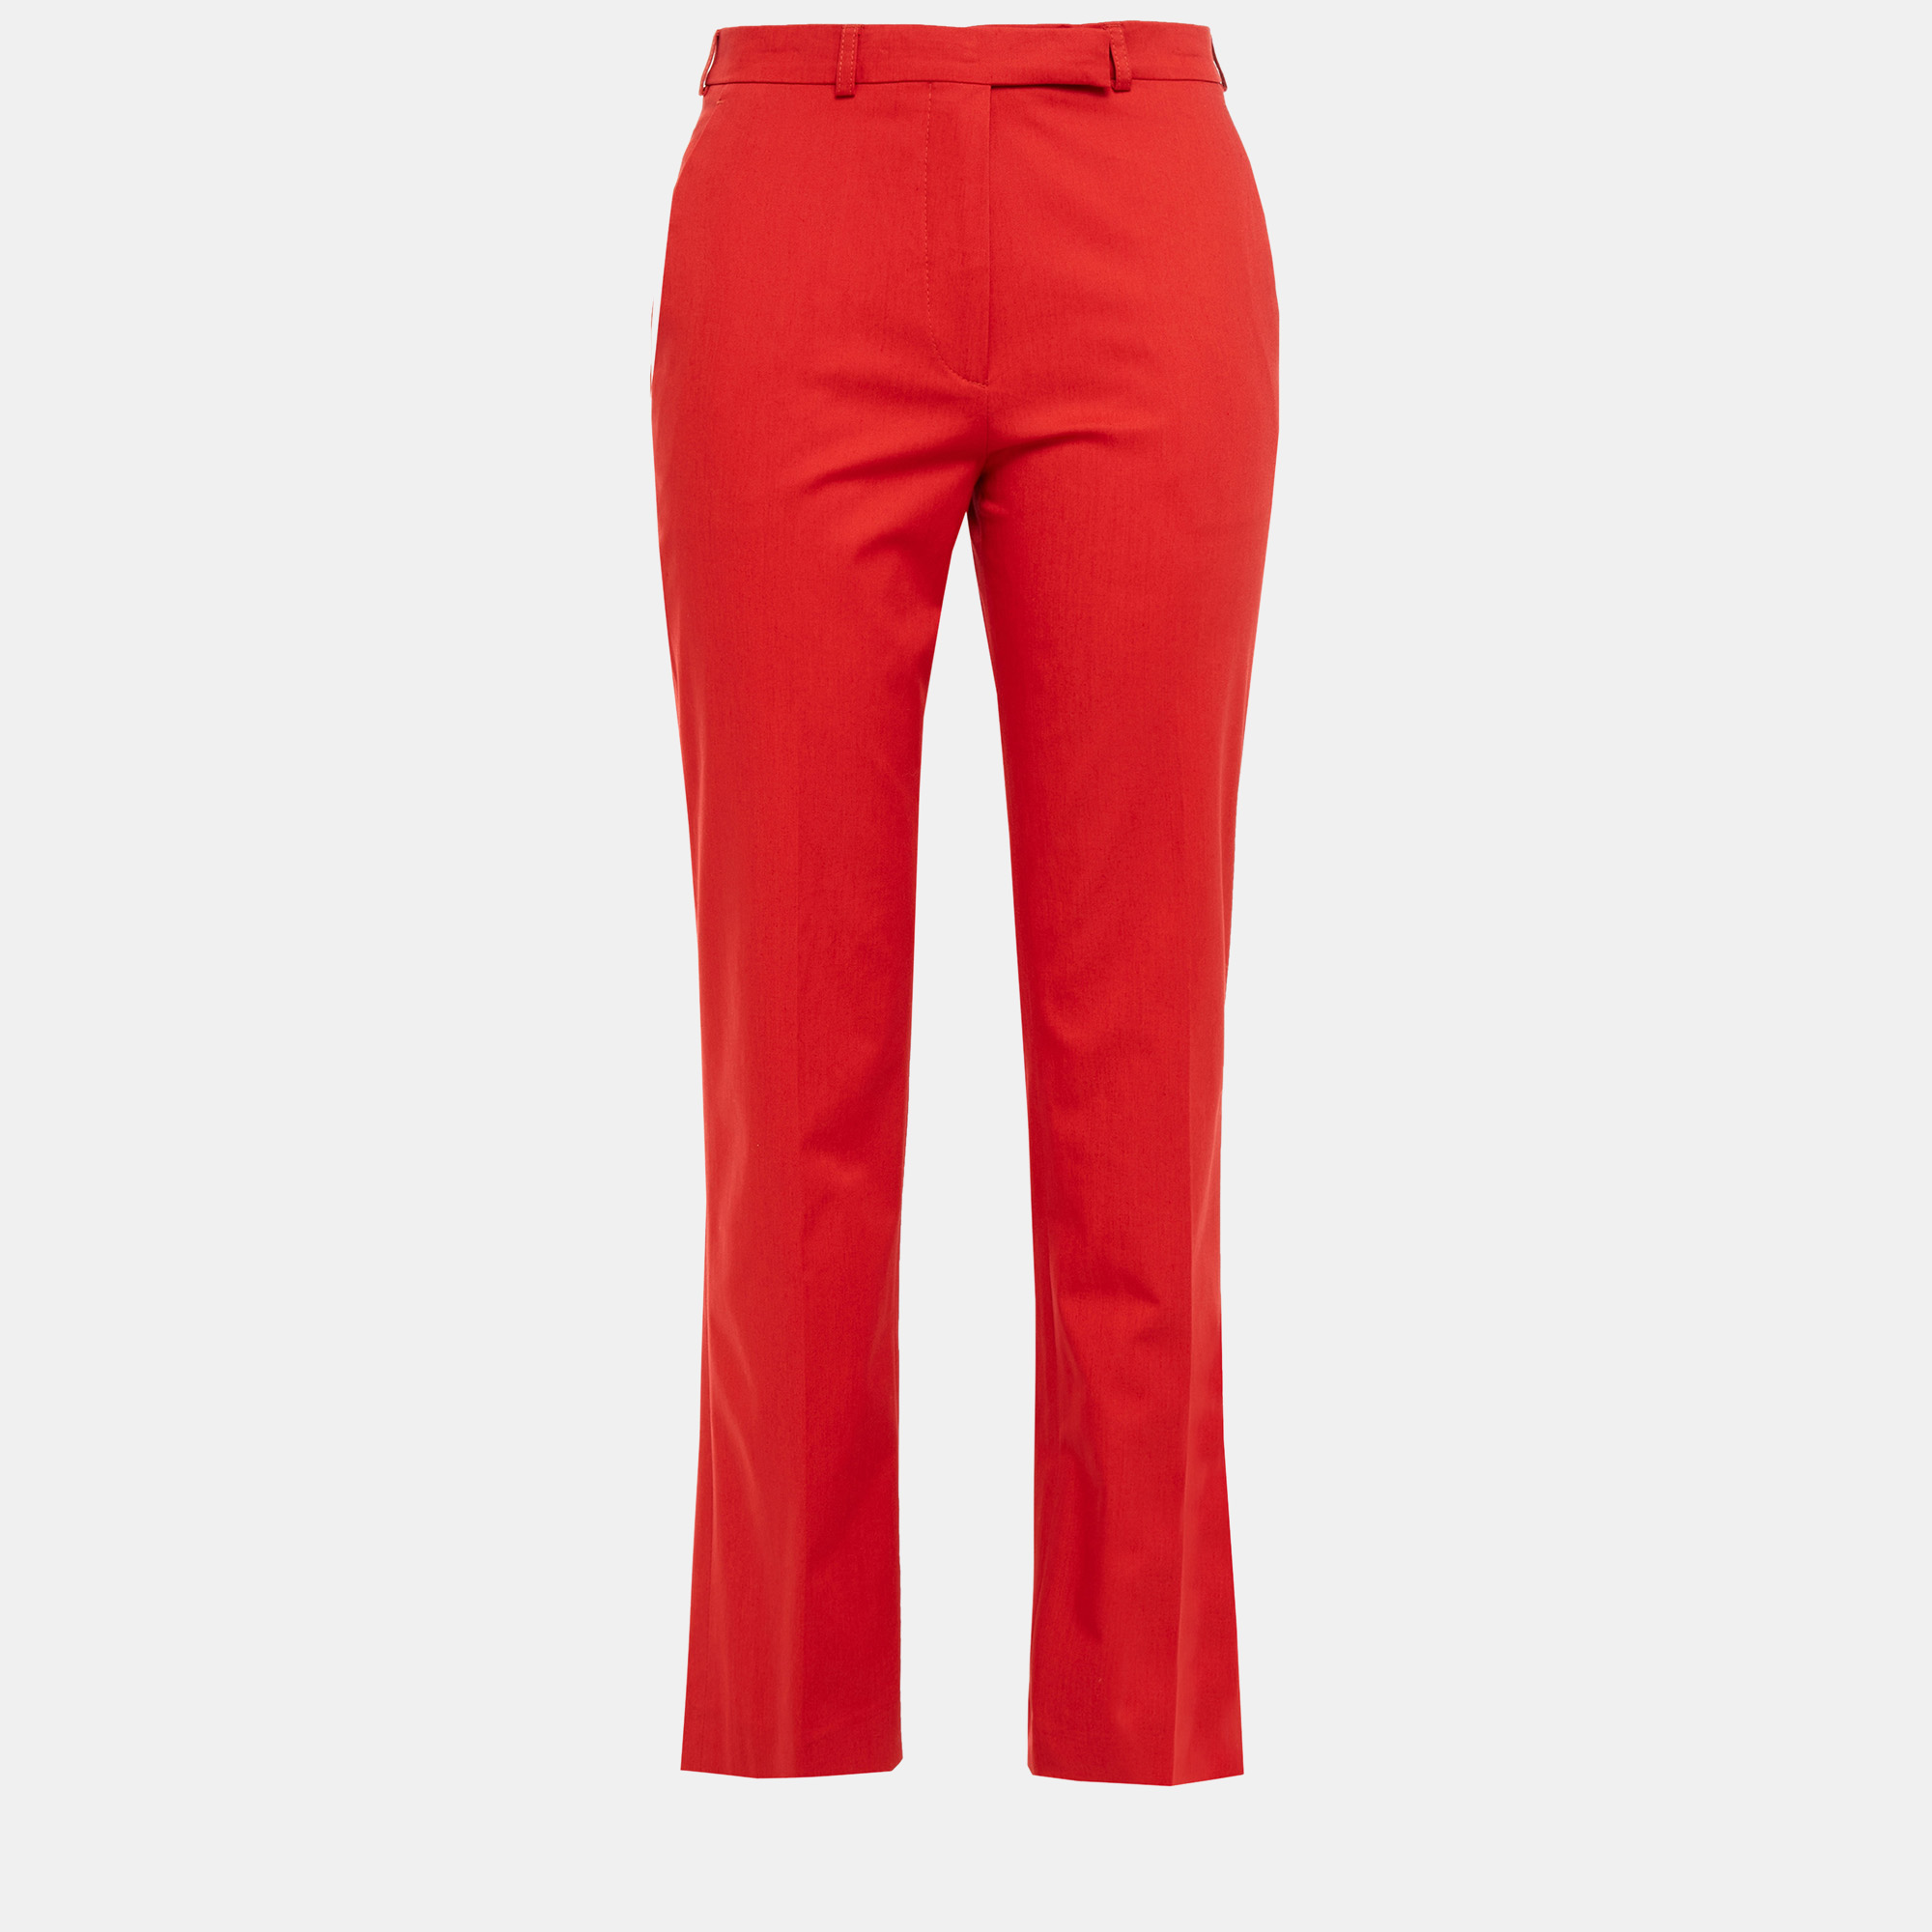 Etro red cotton skinny leg pants m (it 44)